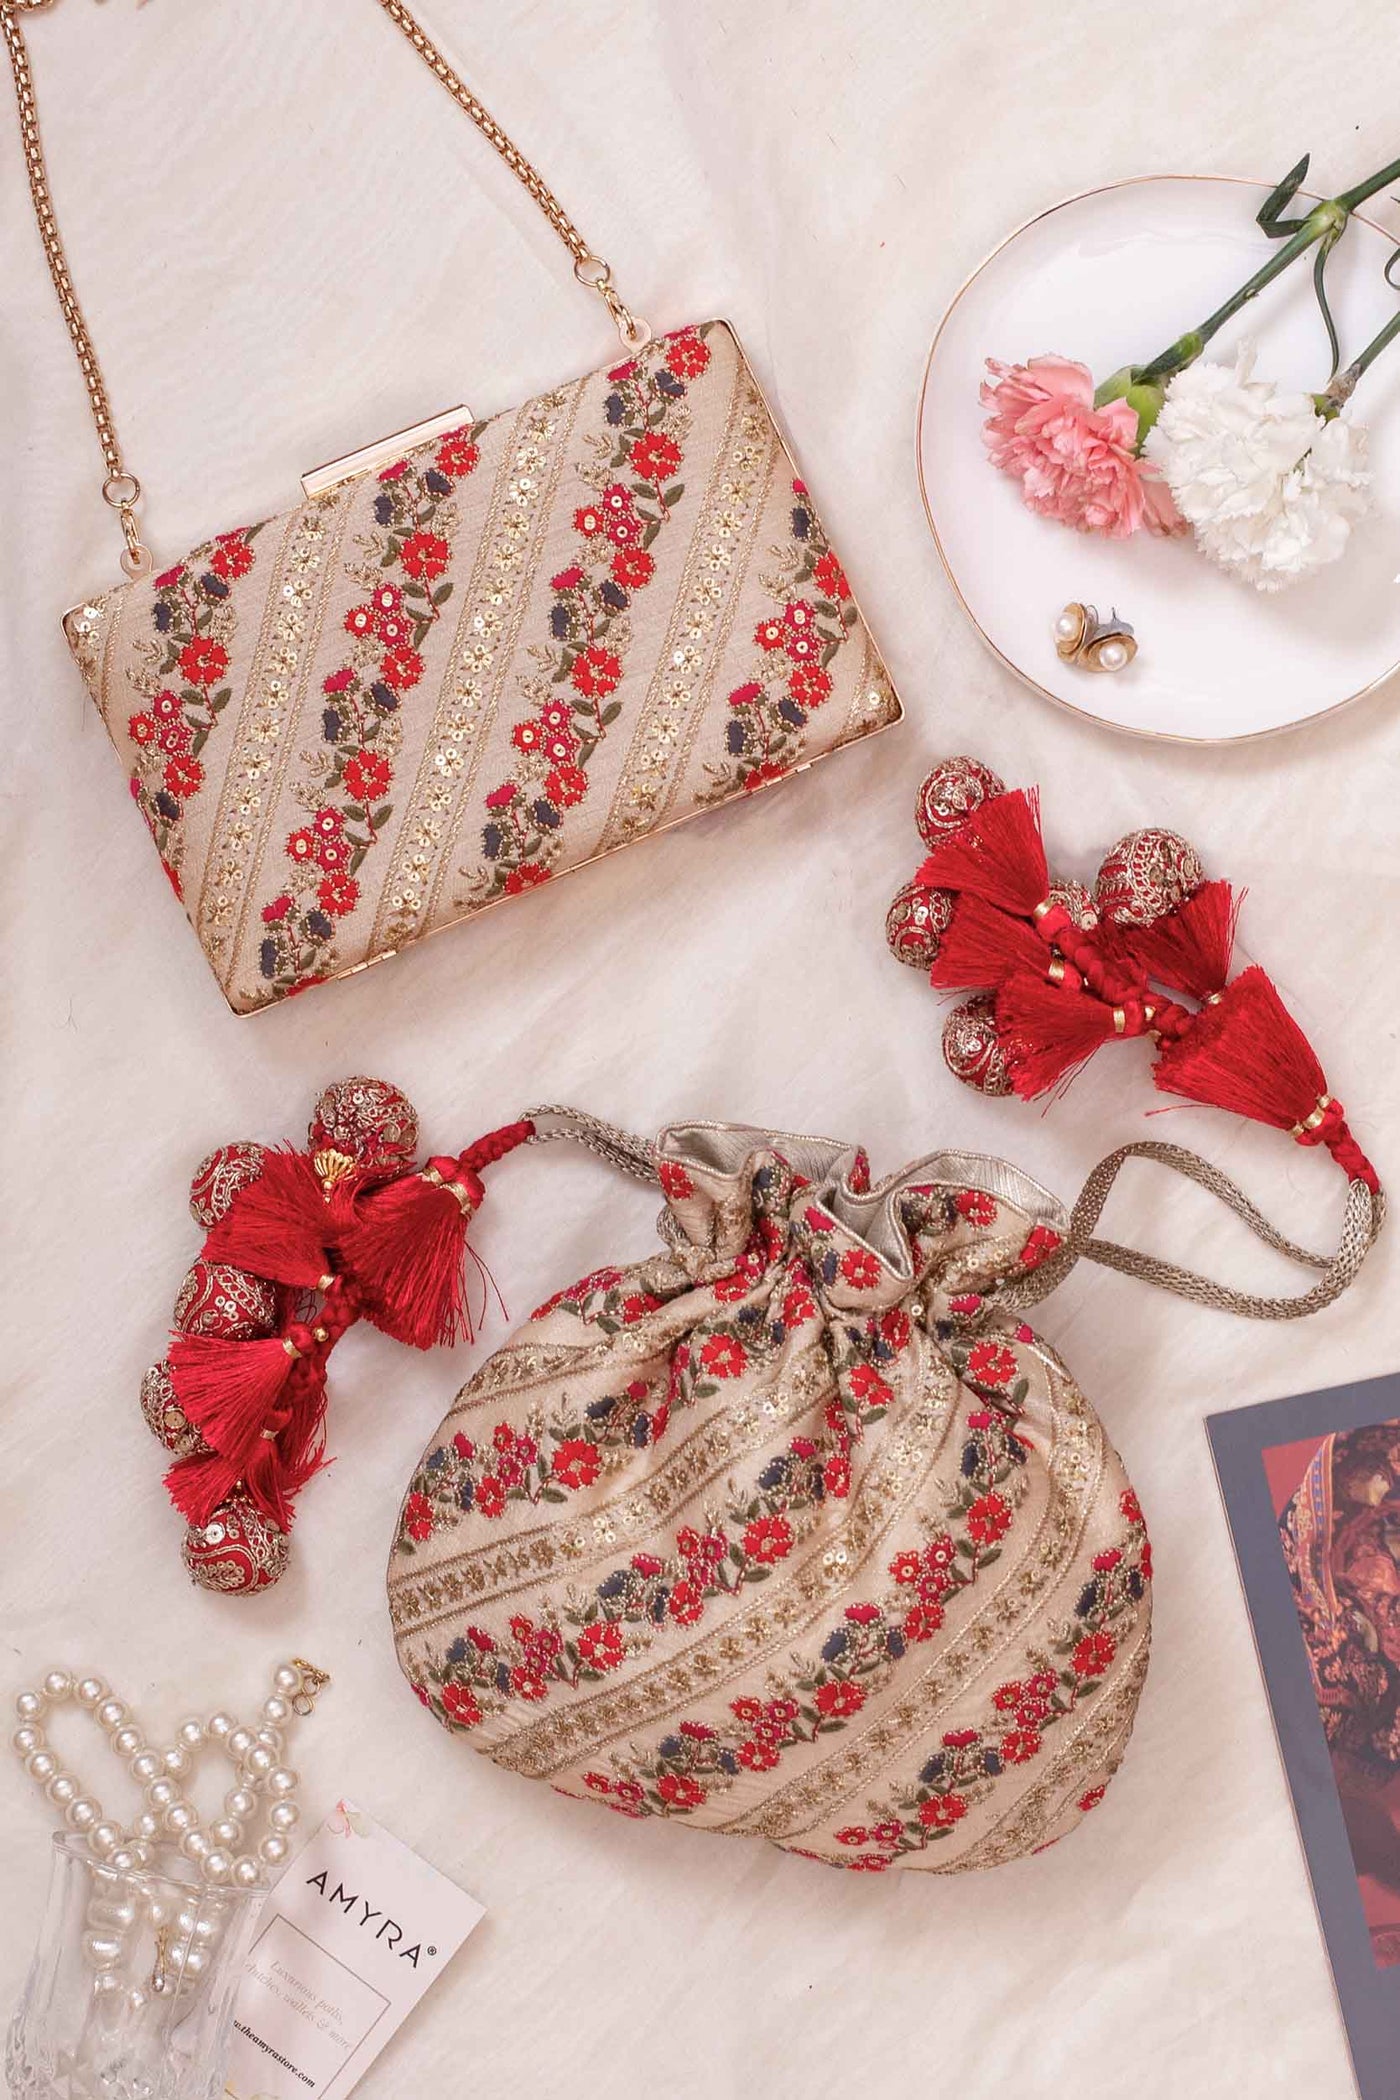 Buy Amyra Jaipur Rajsthani Red Stone Work Potli Bag/pusre for  Marriage.Designer Bag/potly for Women/Girls/Ladies.Rajasthani Potli Purse  for Suit/Sari/Lehnga at Amazon.in